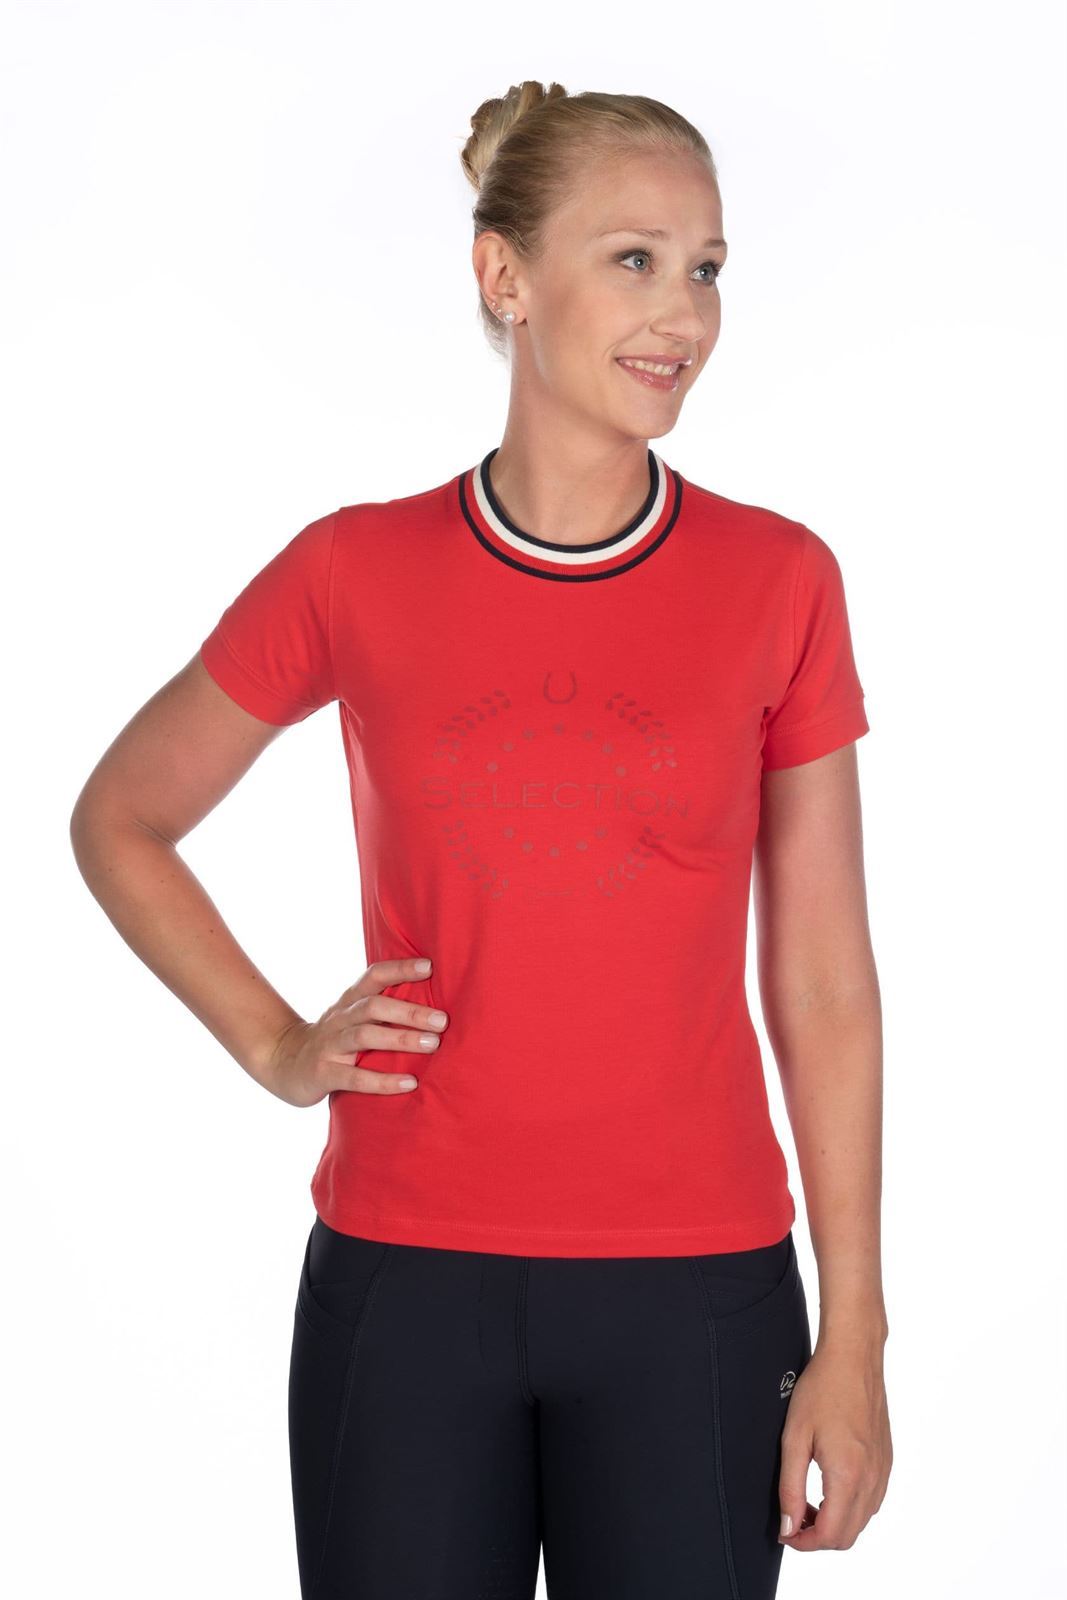 Camiseta HKM Sports Equipment Aruba mujer color rojo - Imagen 2